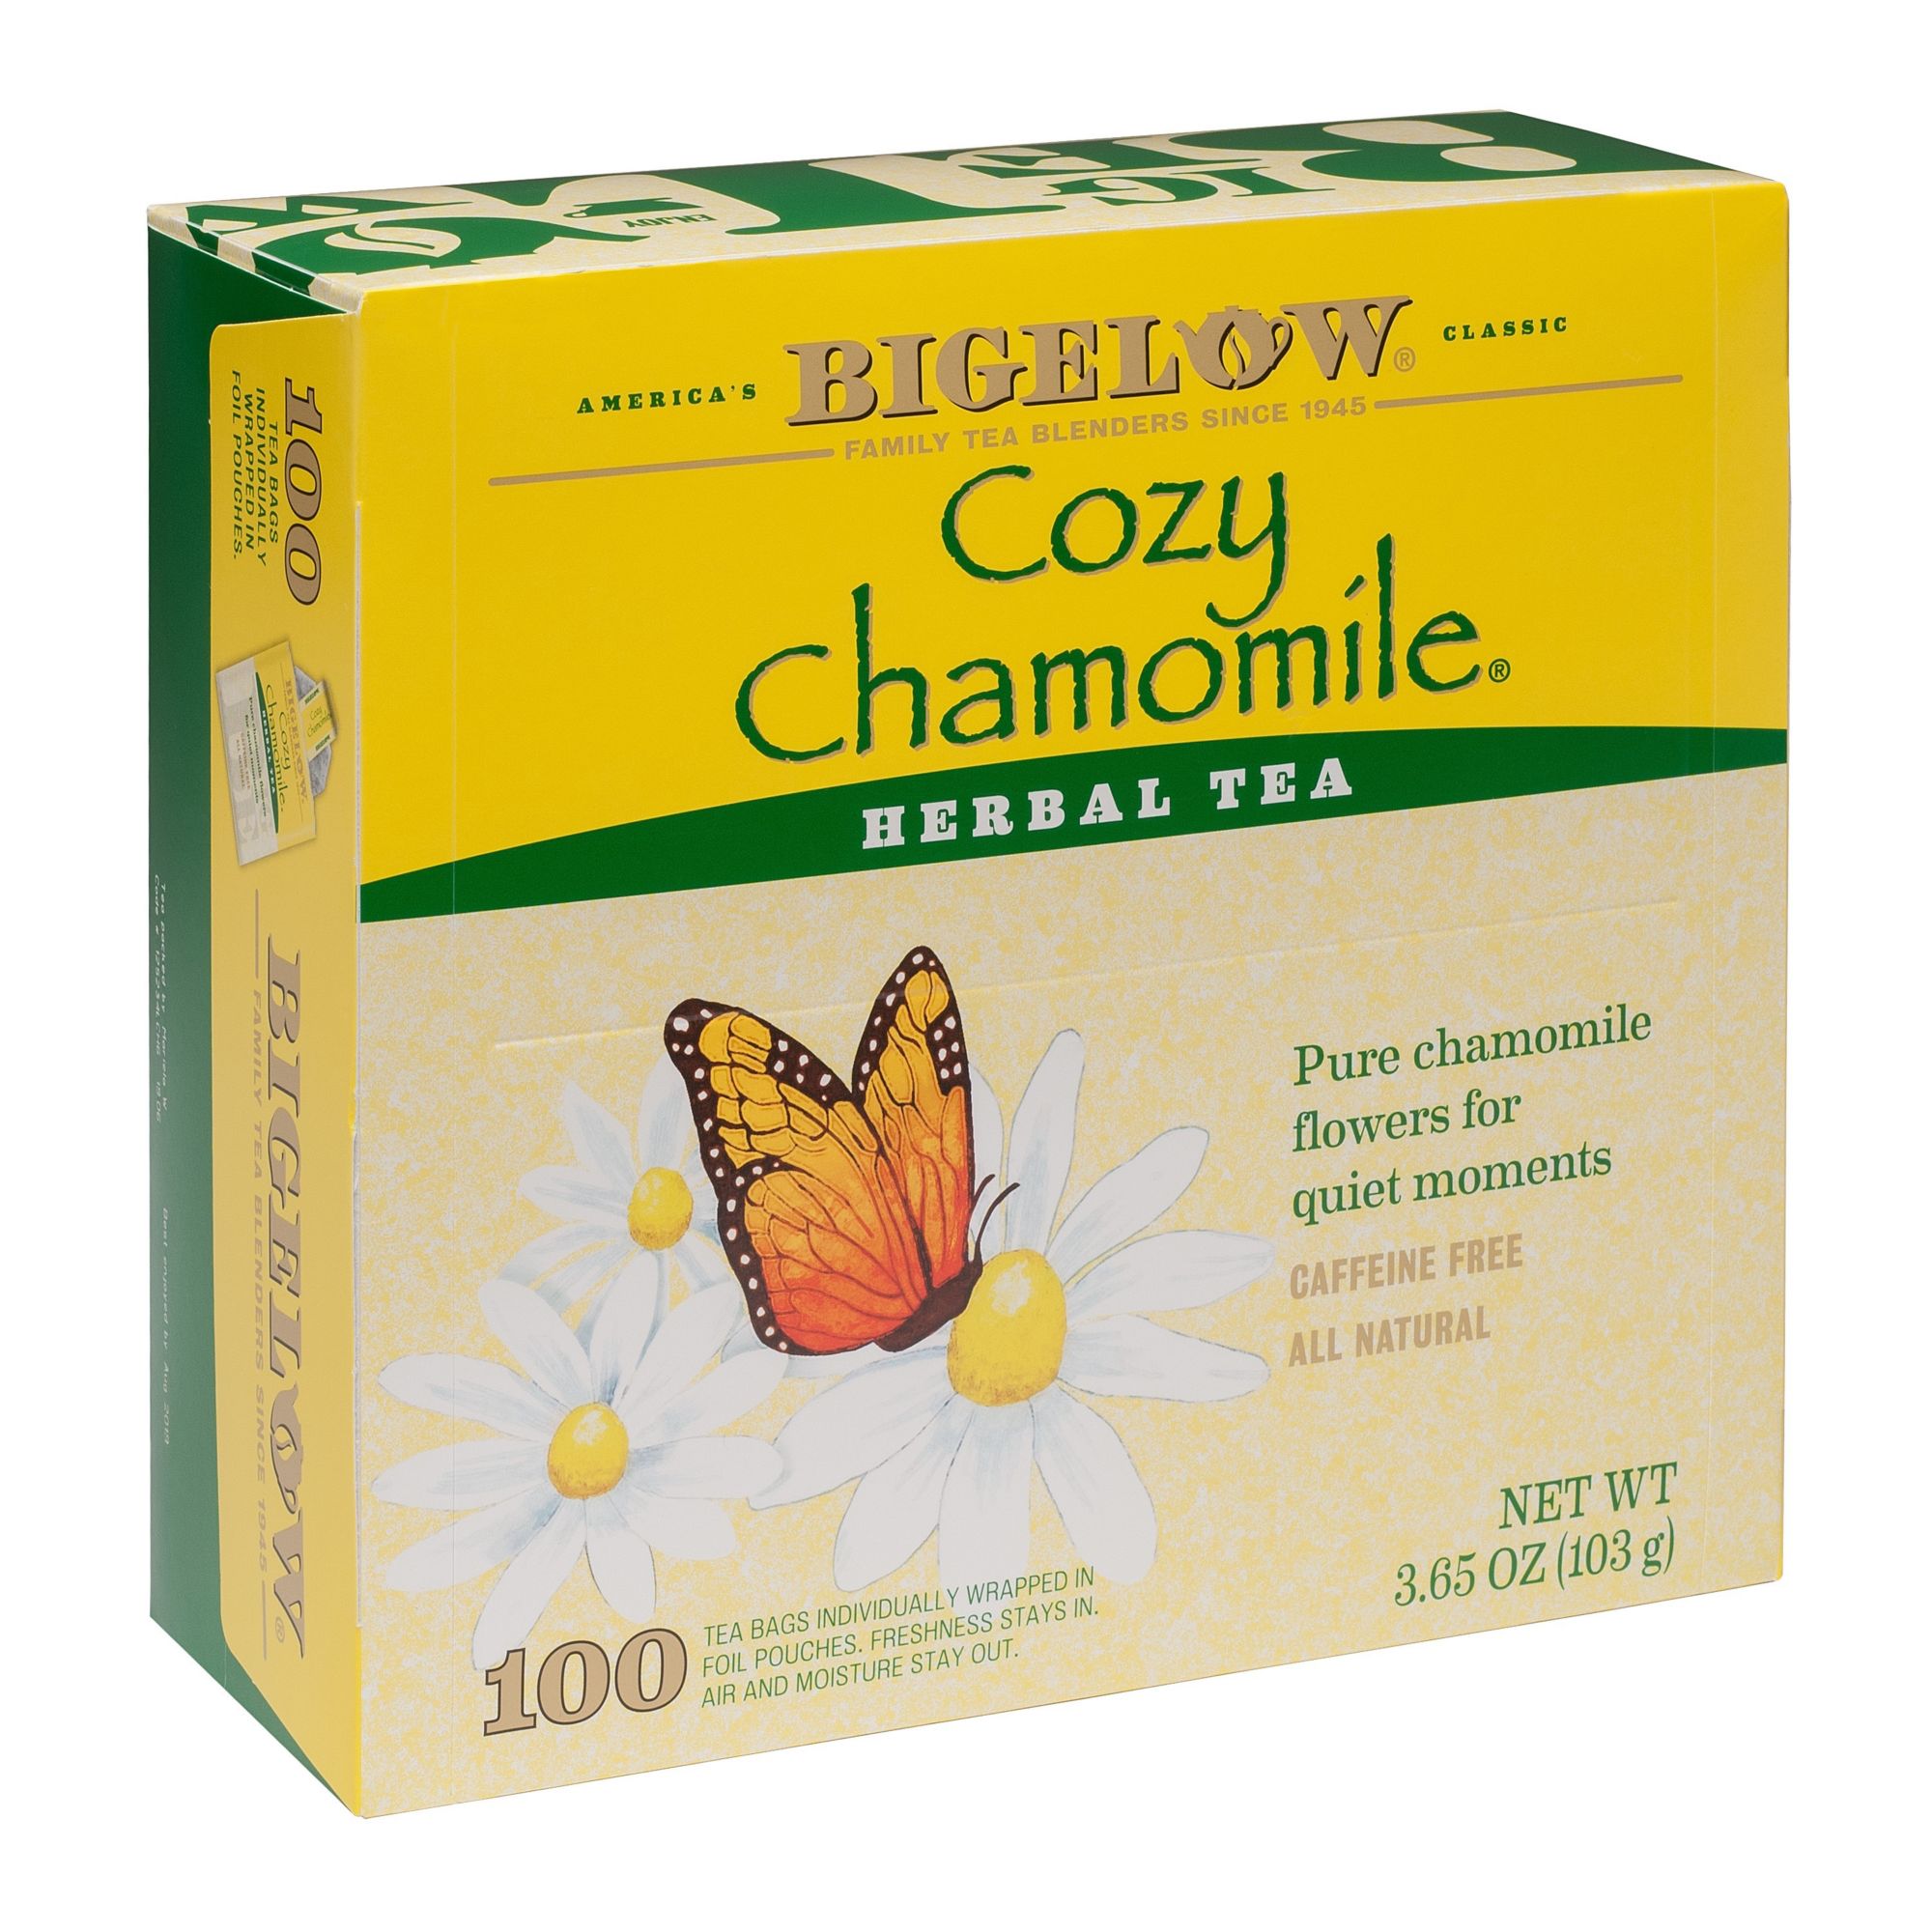 Bigelow Cozy Caffeine Free Chamomile Tea, 100 ct.